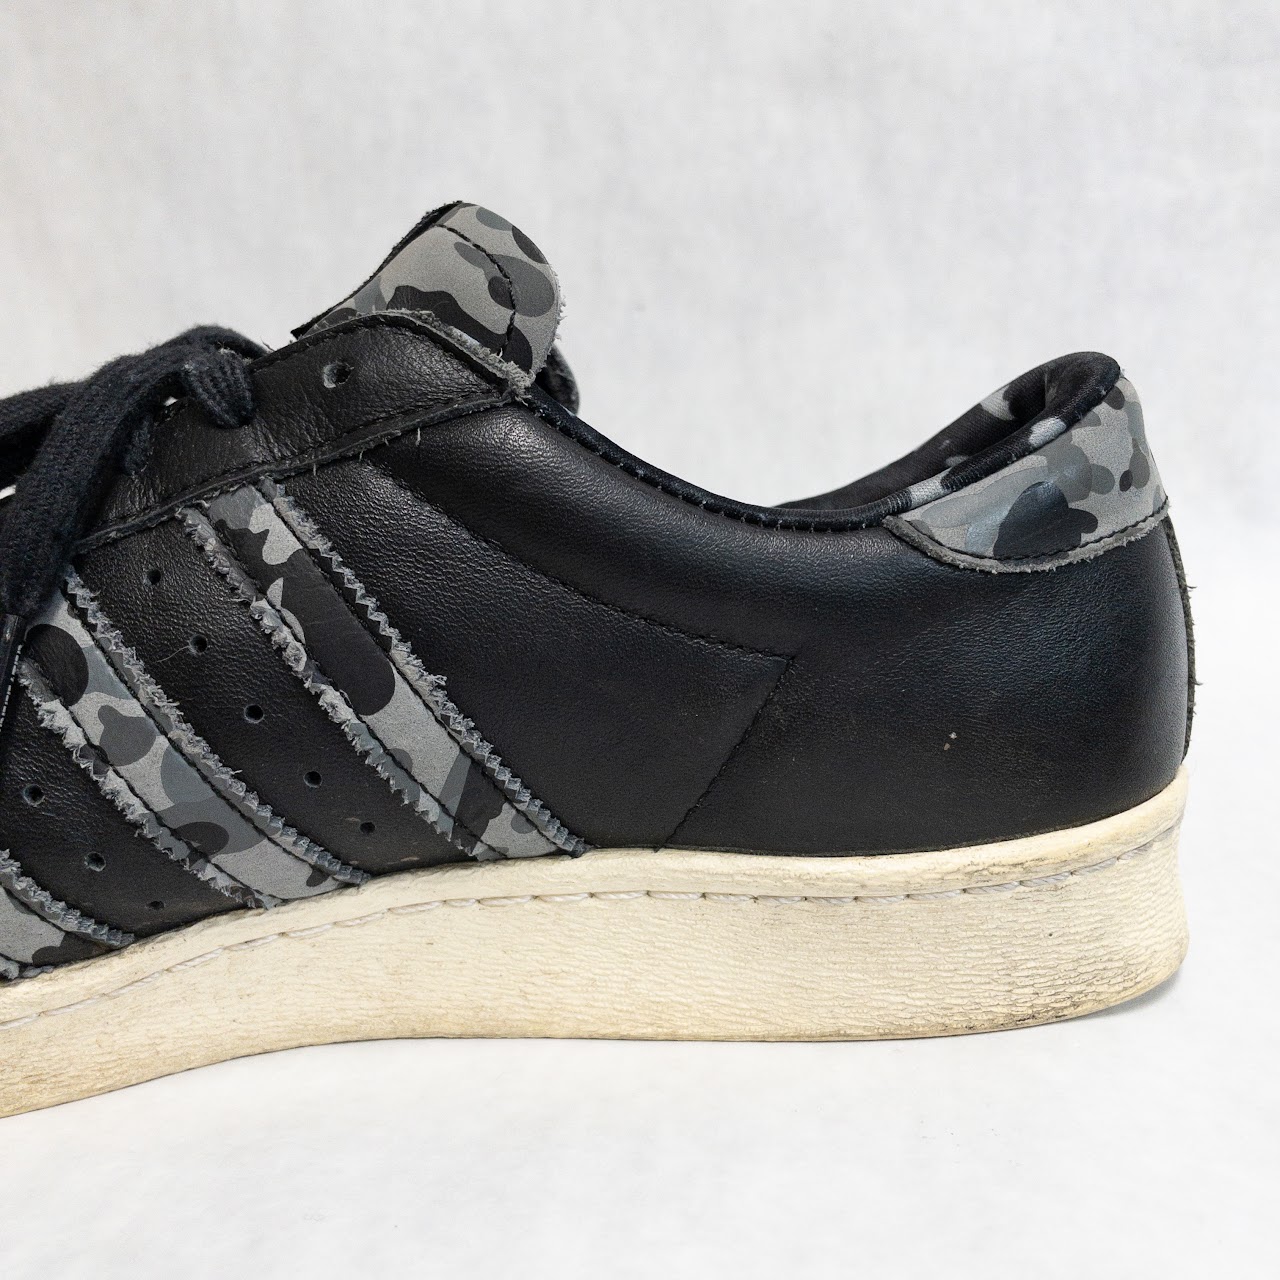 Adidas x BAPE Camo Leather Sneakers